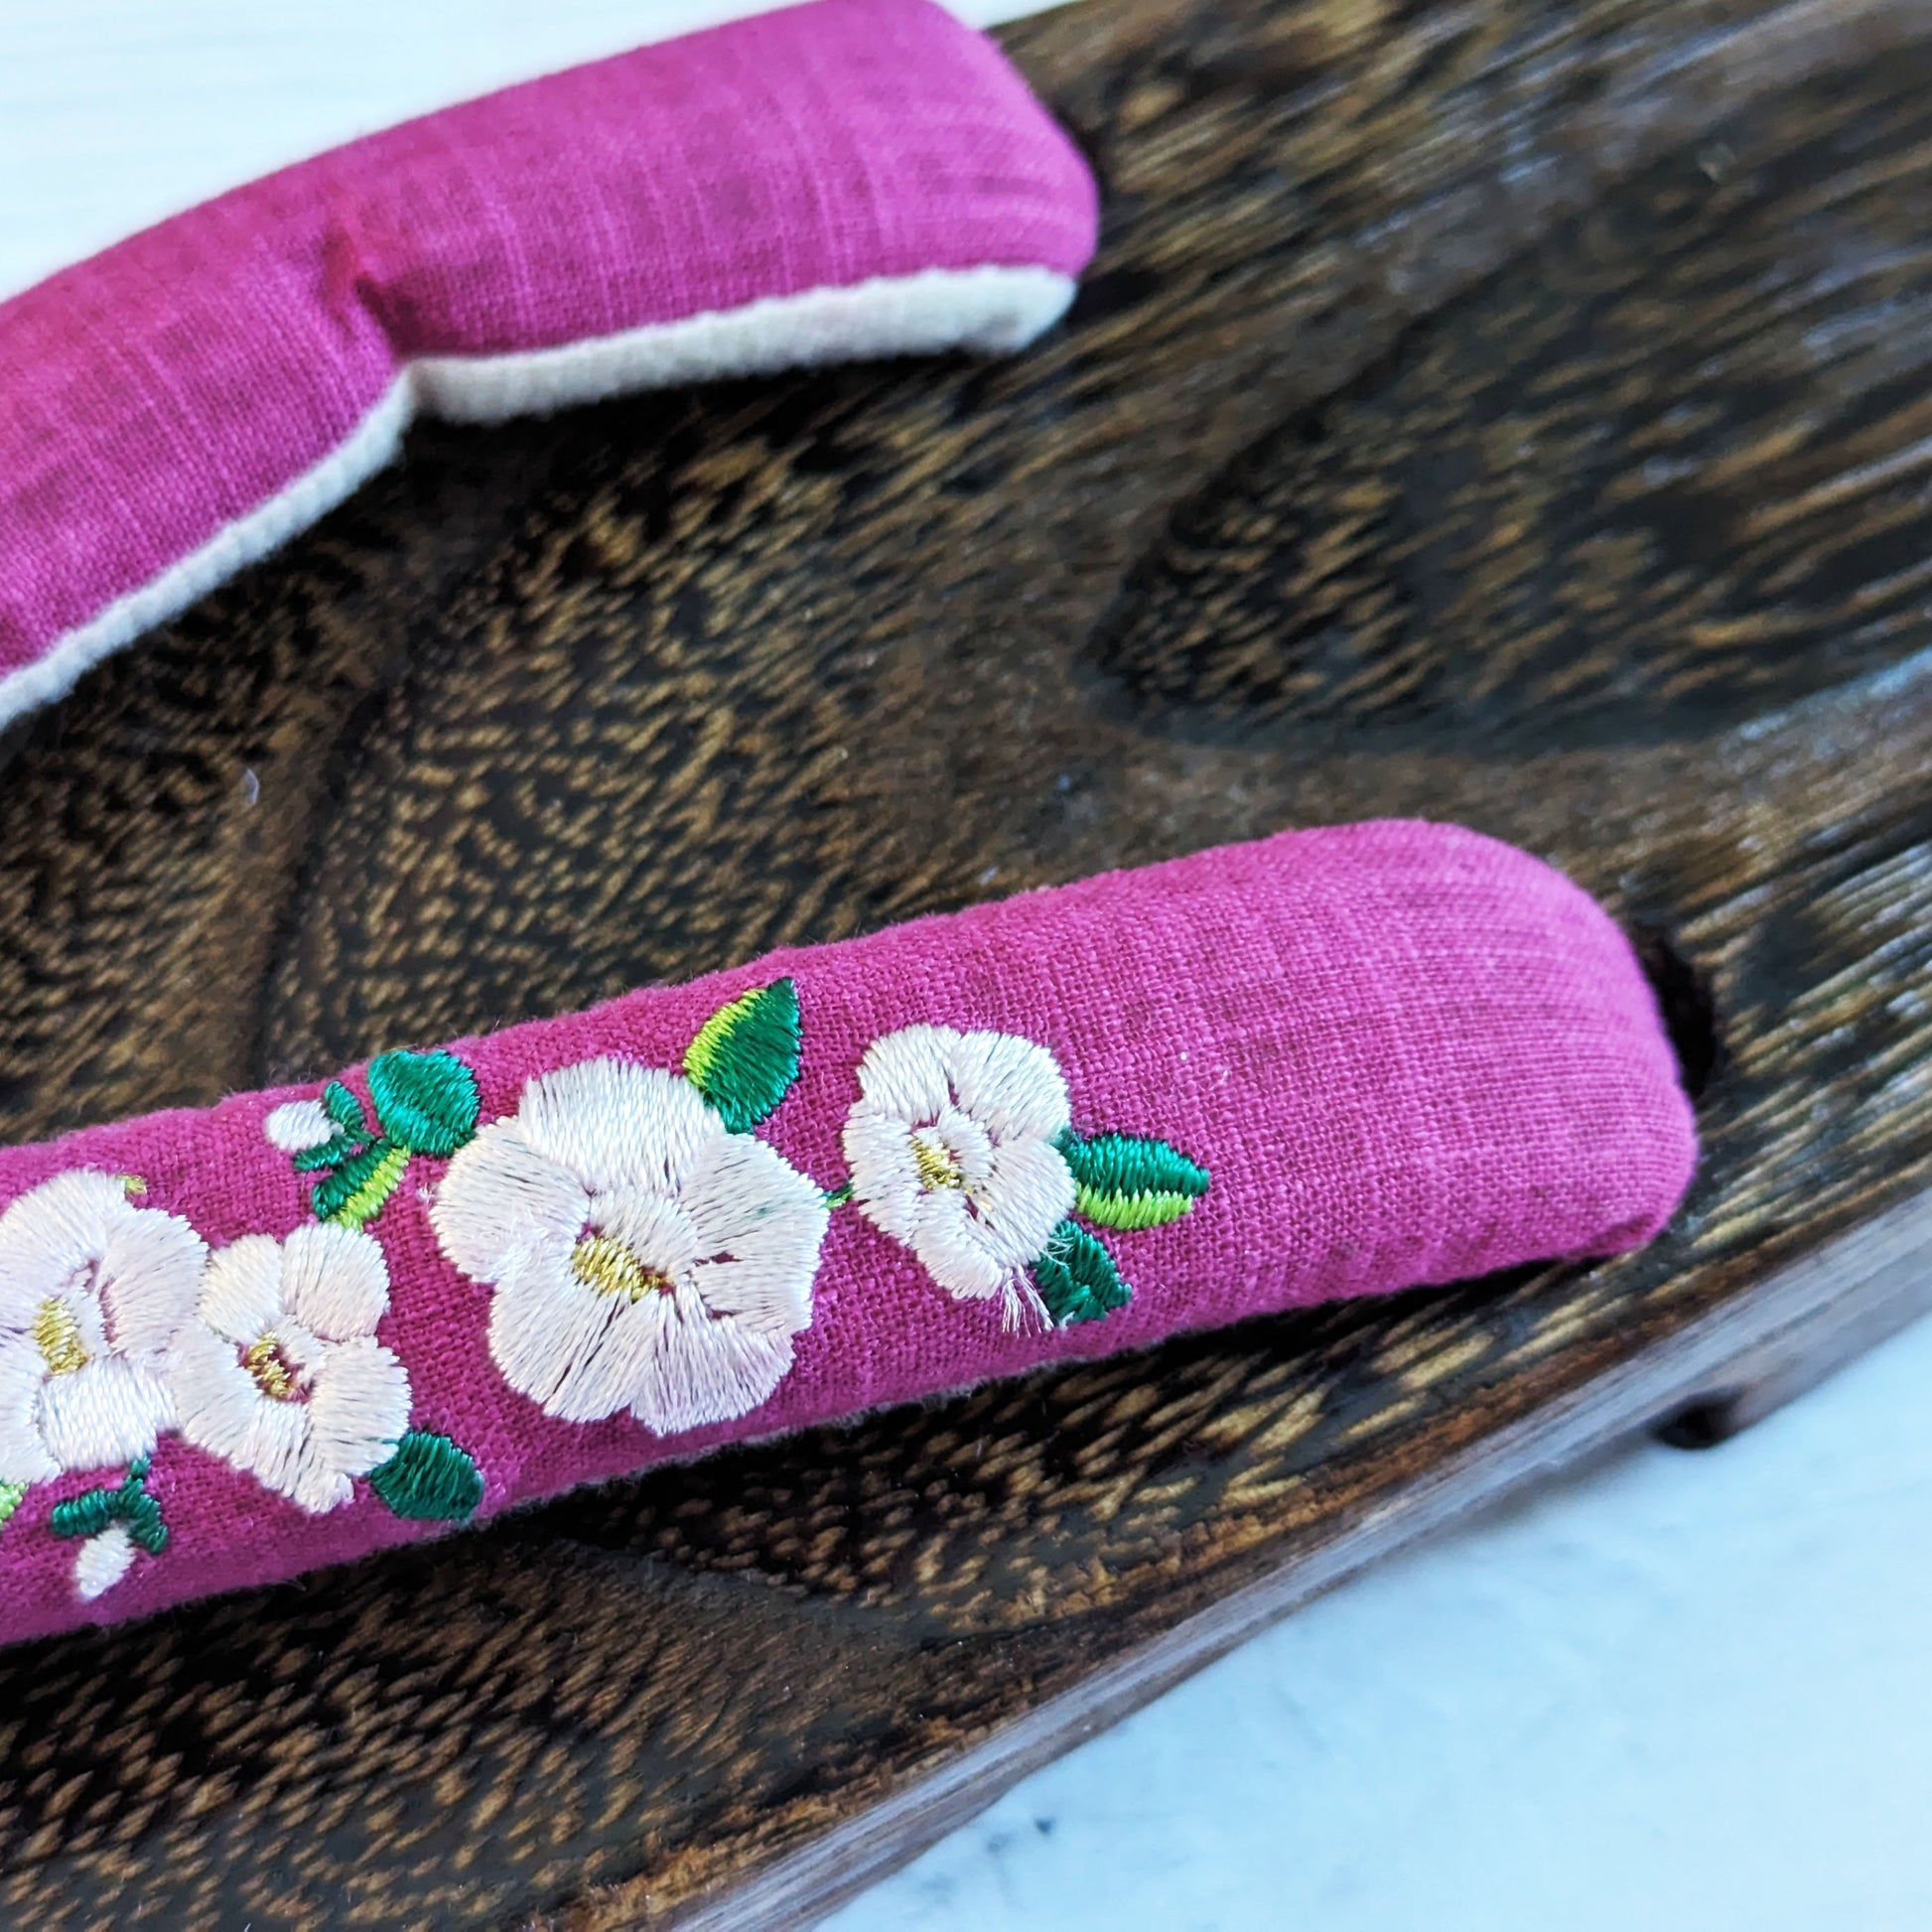 Traditional Geta Sandals - White Camellias Purple